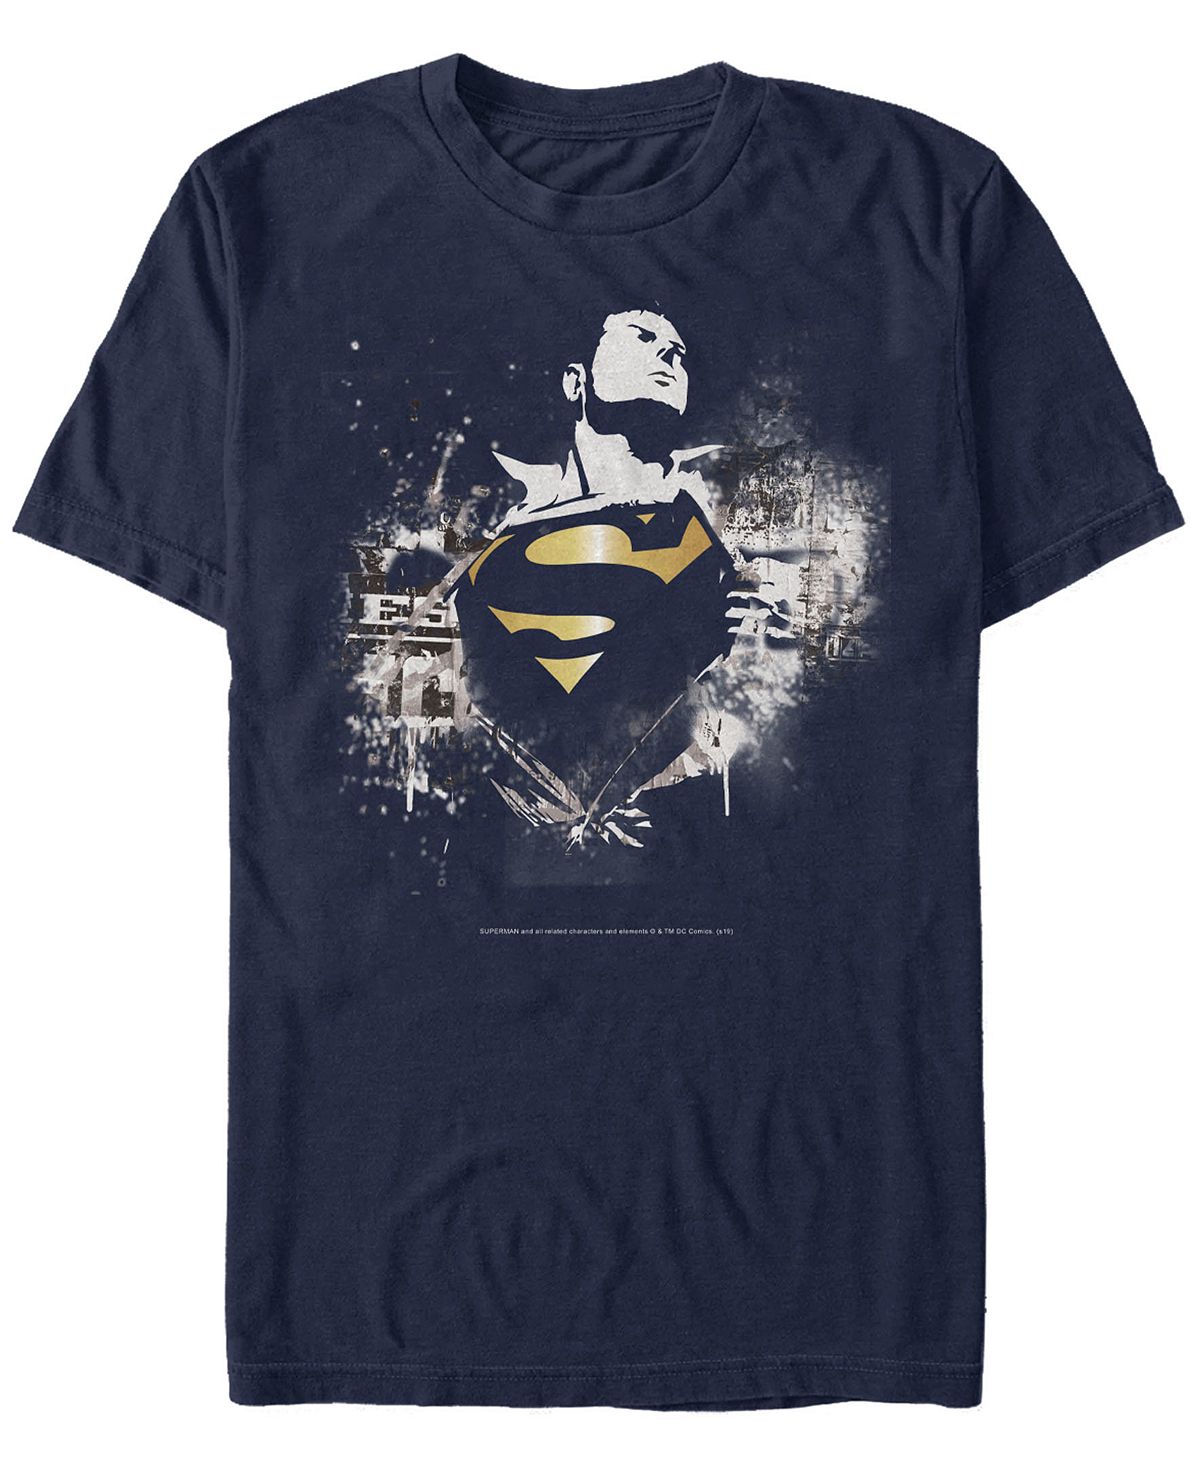 Мужская футболка с коротким рукавом с логотипом супермена dc dc Fifth Sun, синий цена и фото